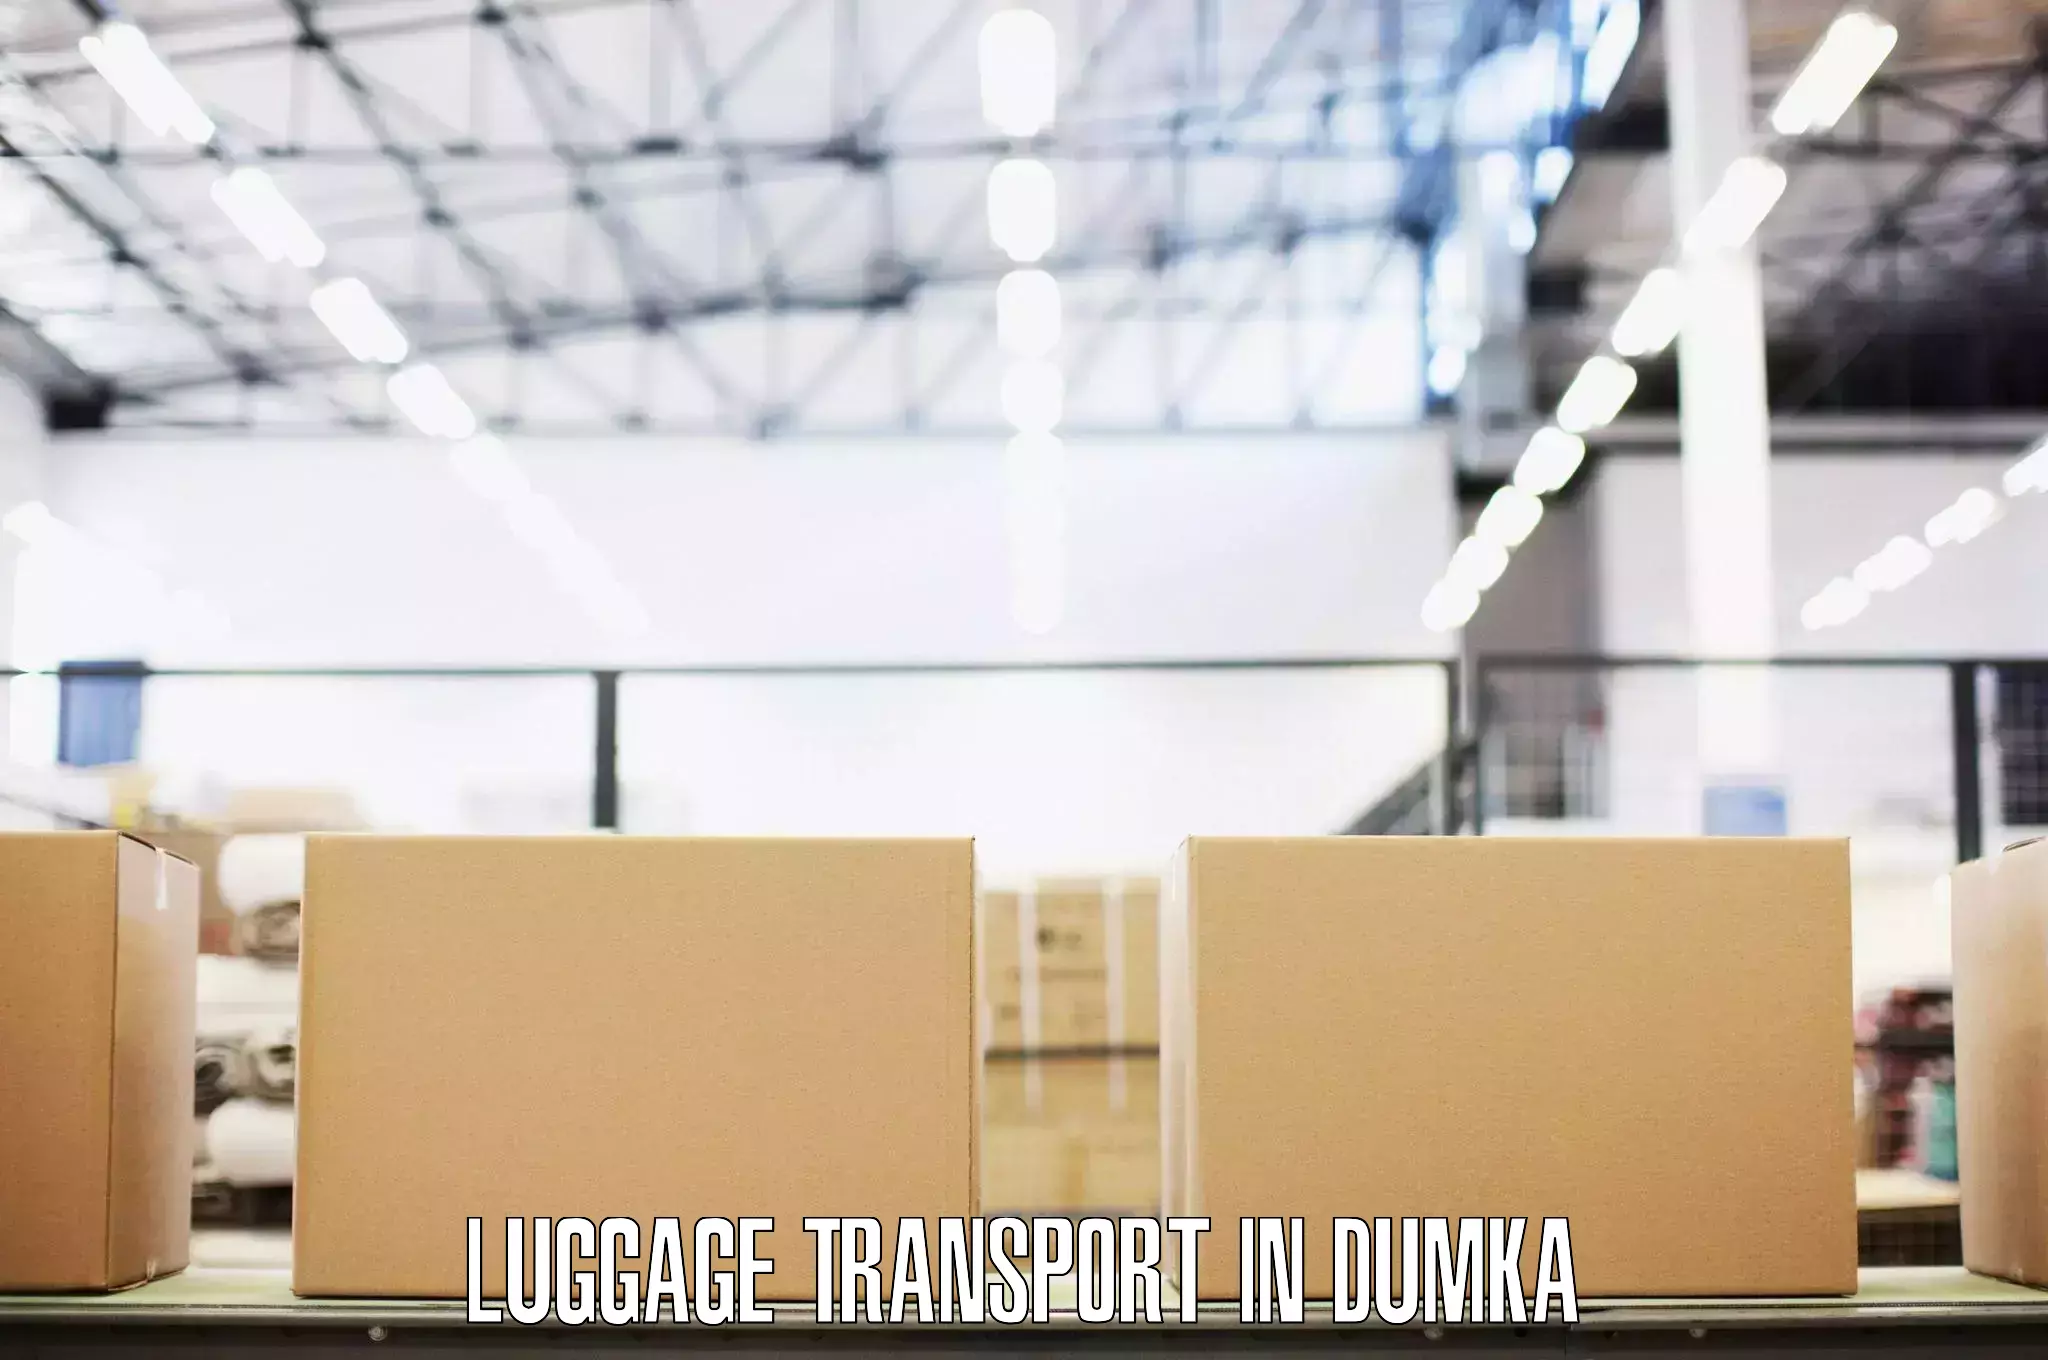 Multi-destination luggage transport in Dumka